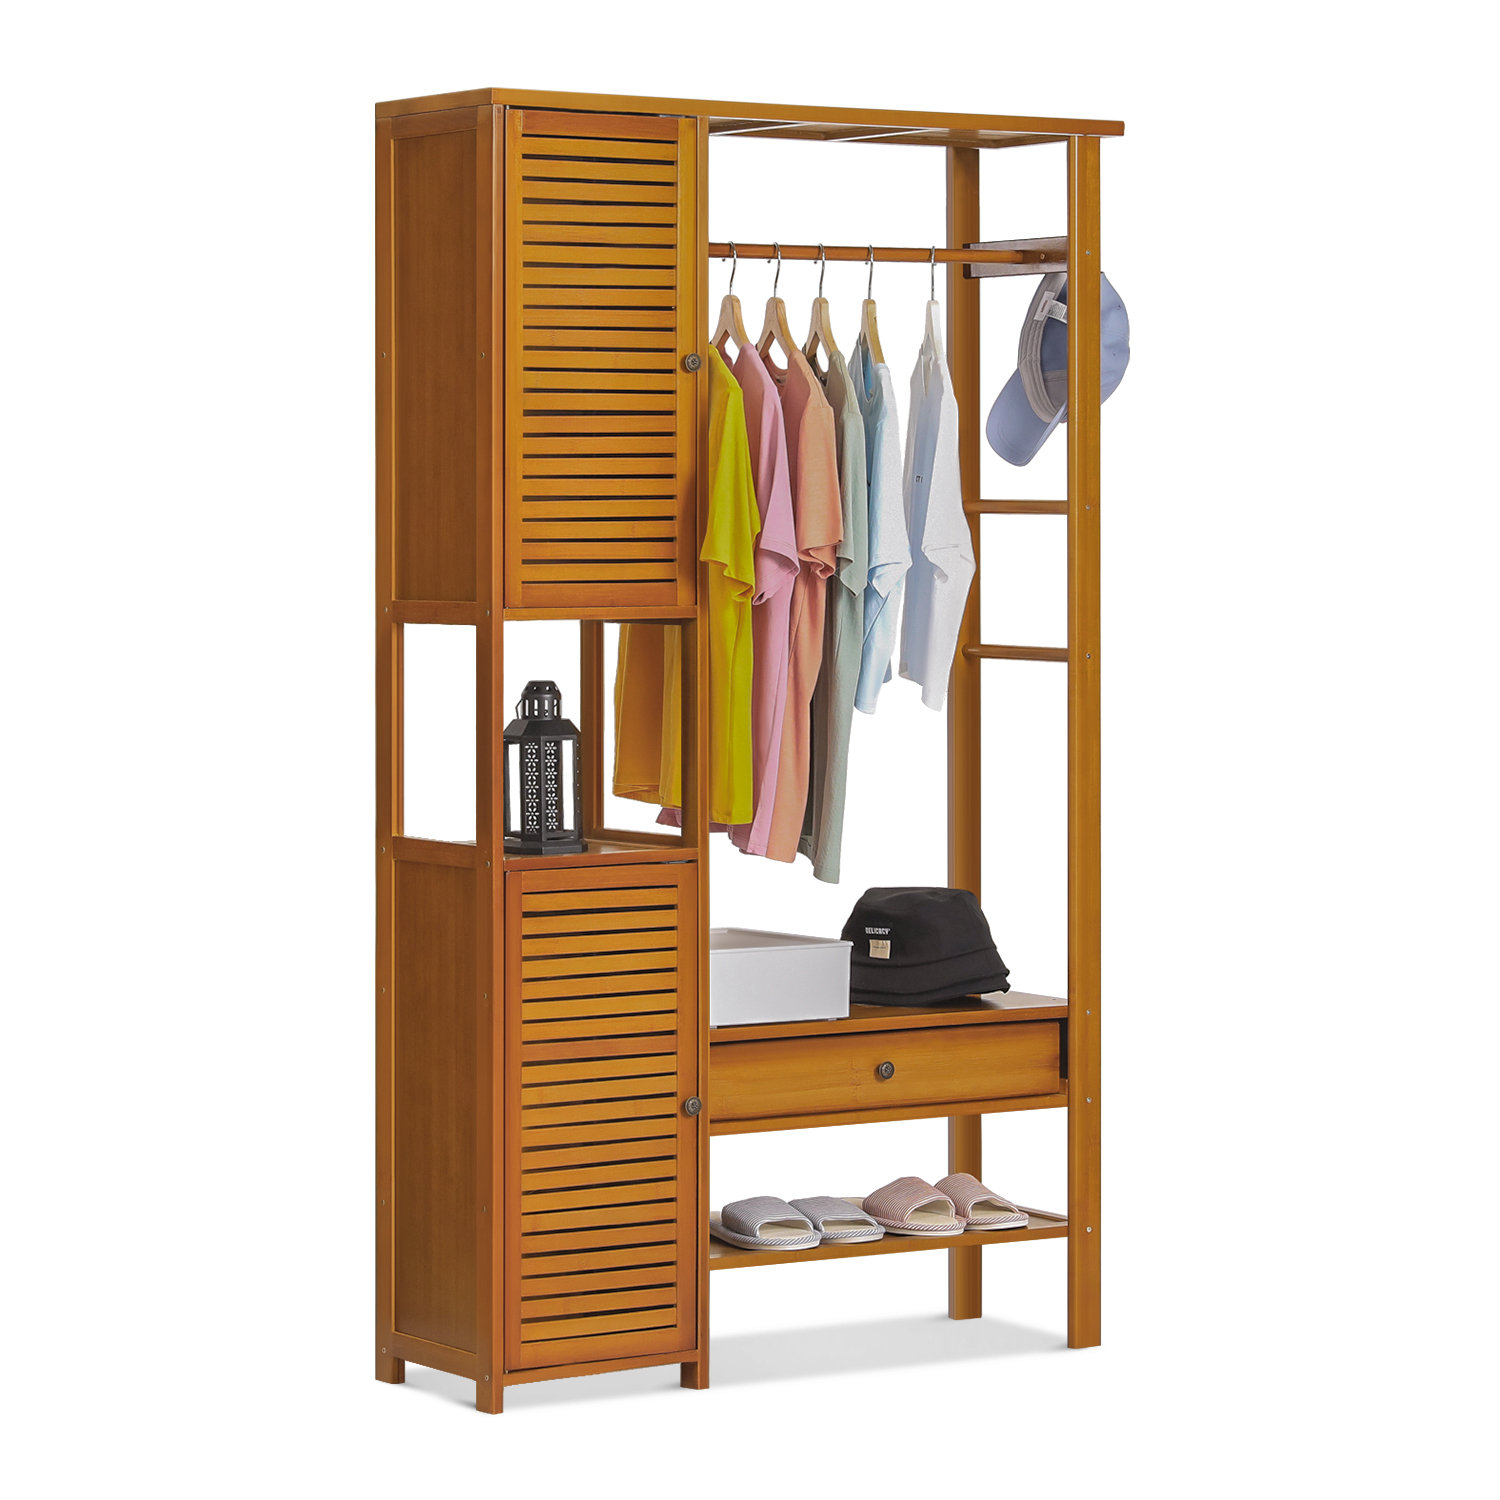 Bamboo Shelves With Drawers, Closet Organization